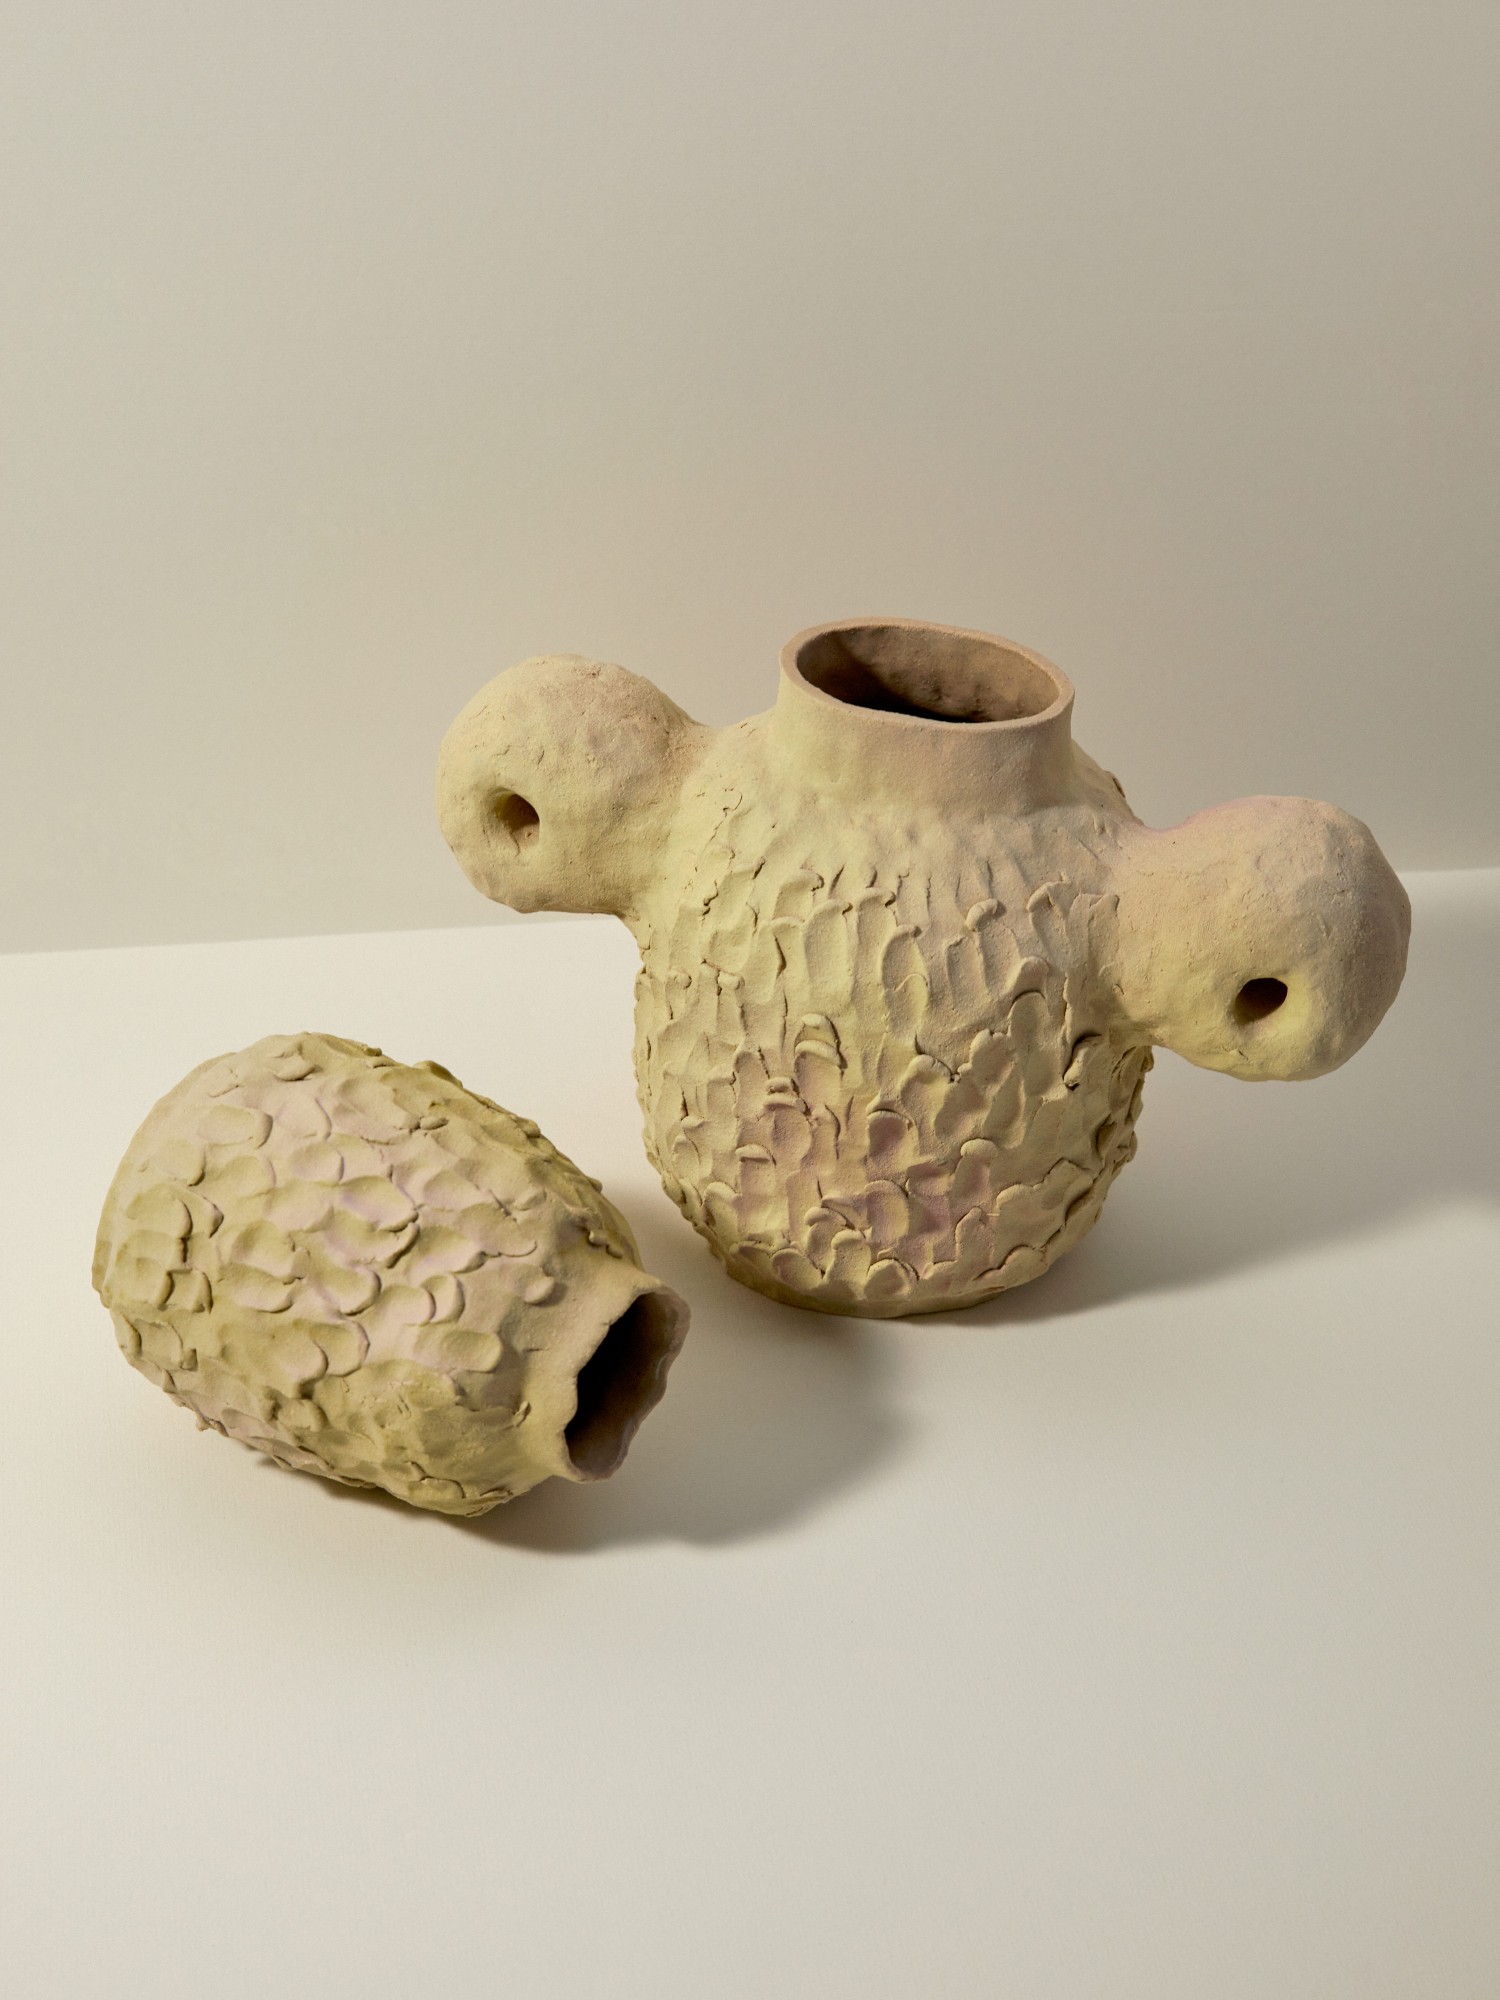 Pauline Bonnet, *Pot-pourri - Métamorphose Objects*, 2021. Photo Myrthe Giesbers